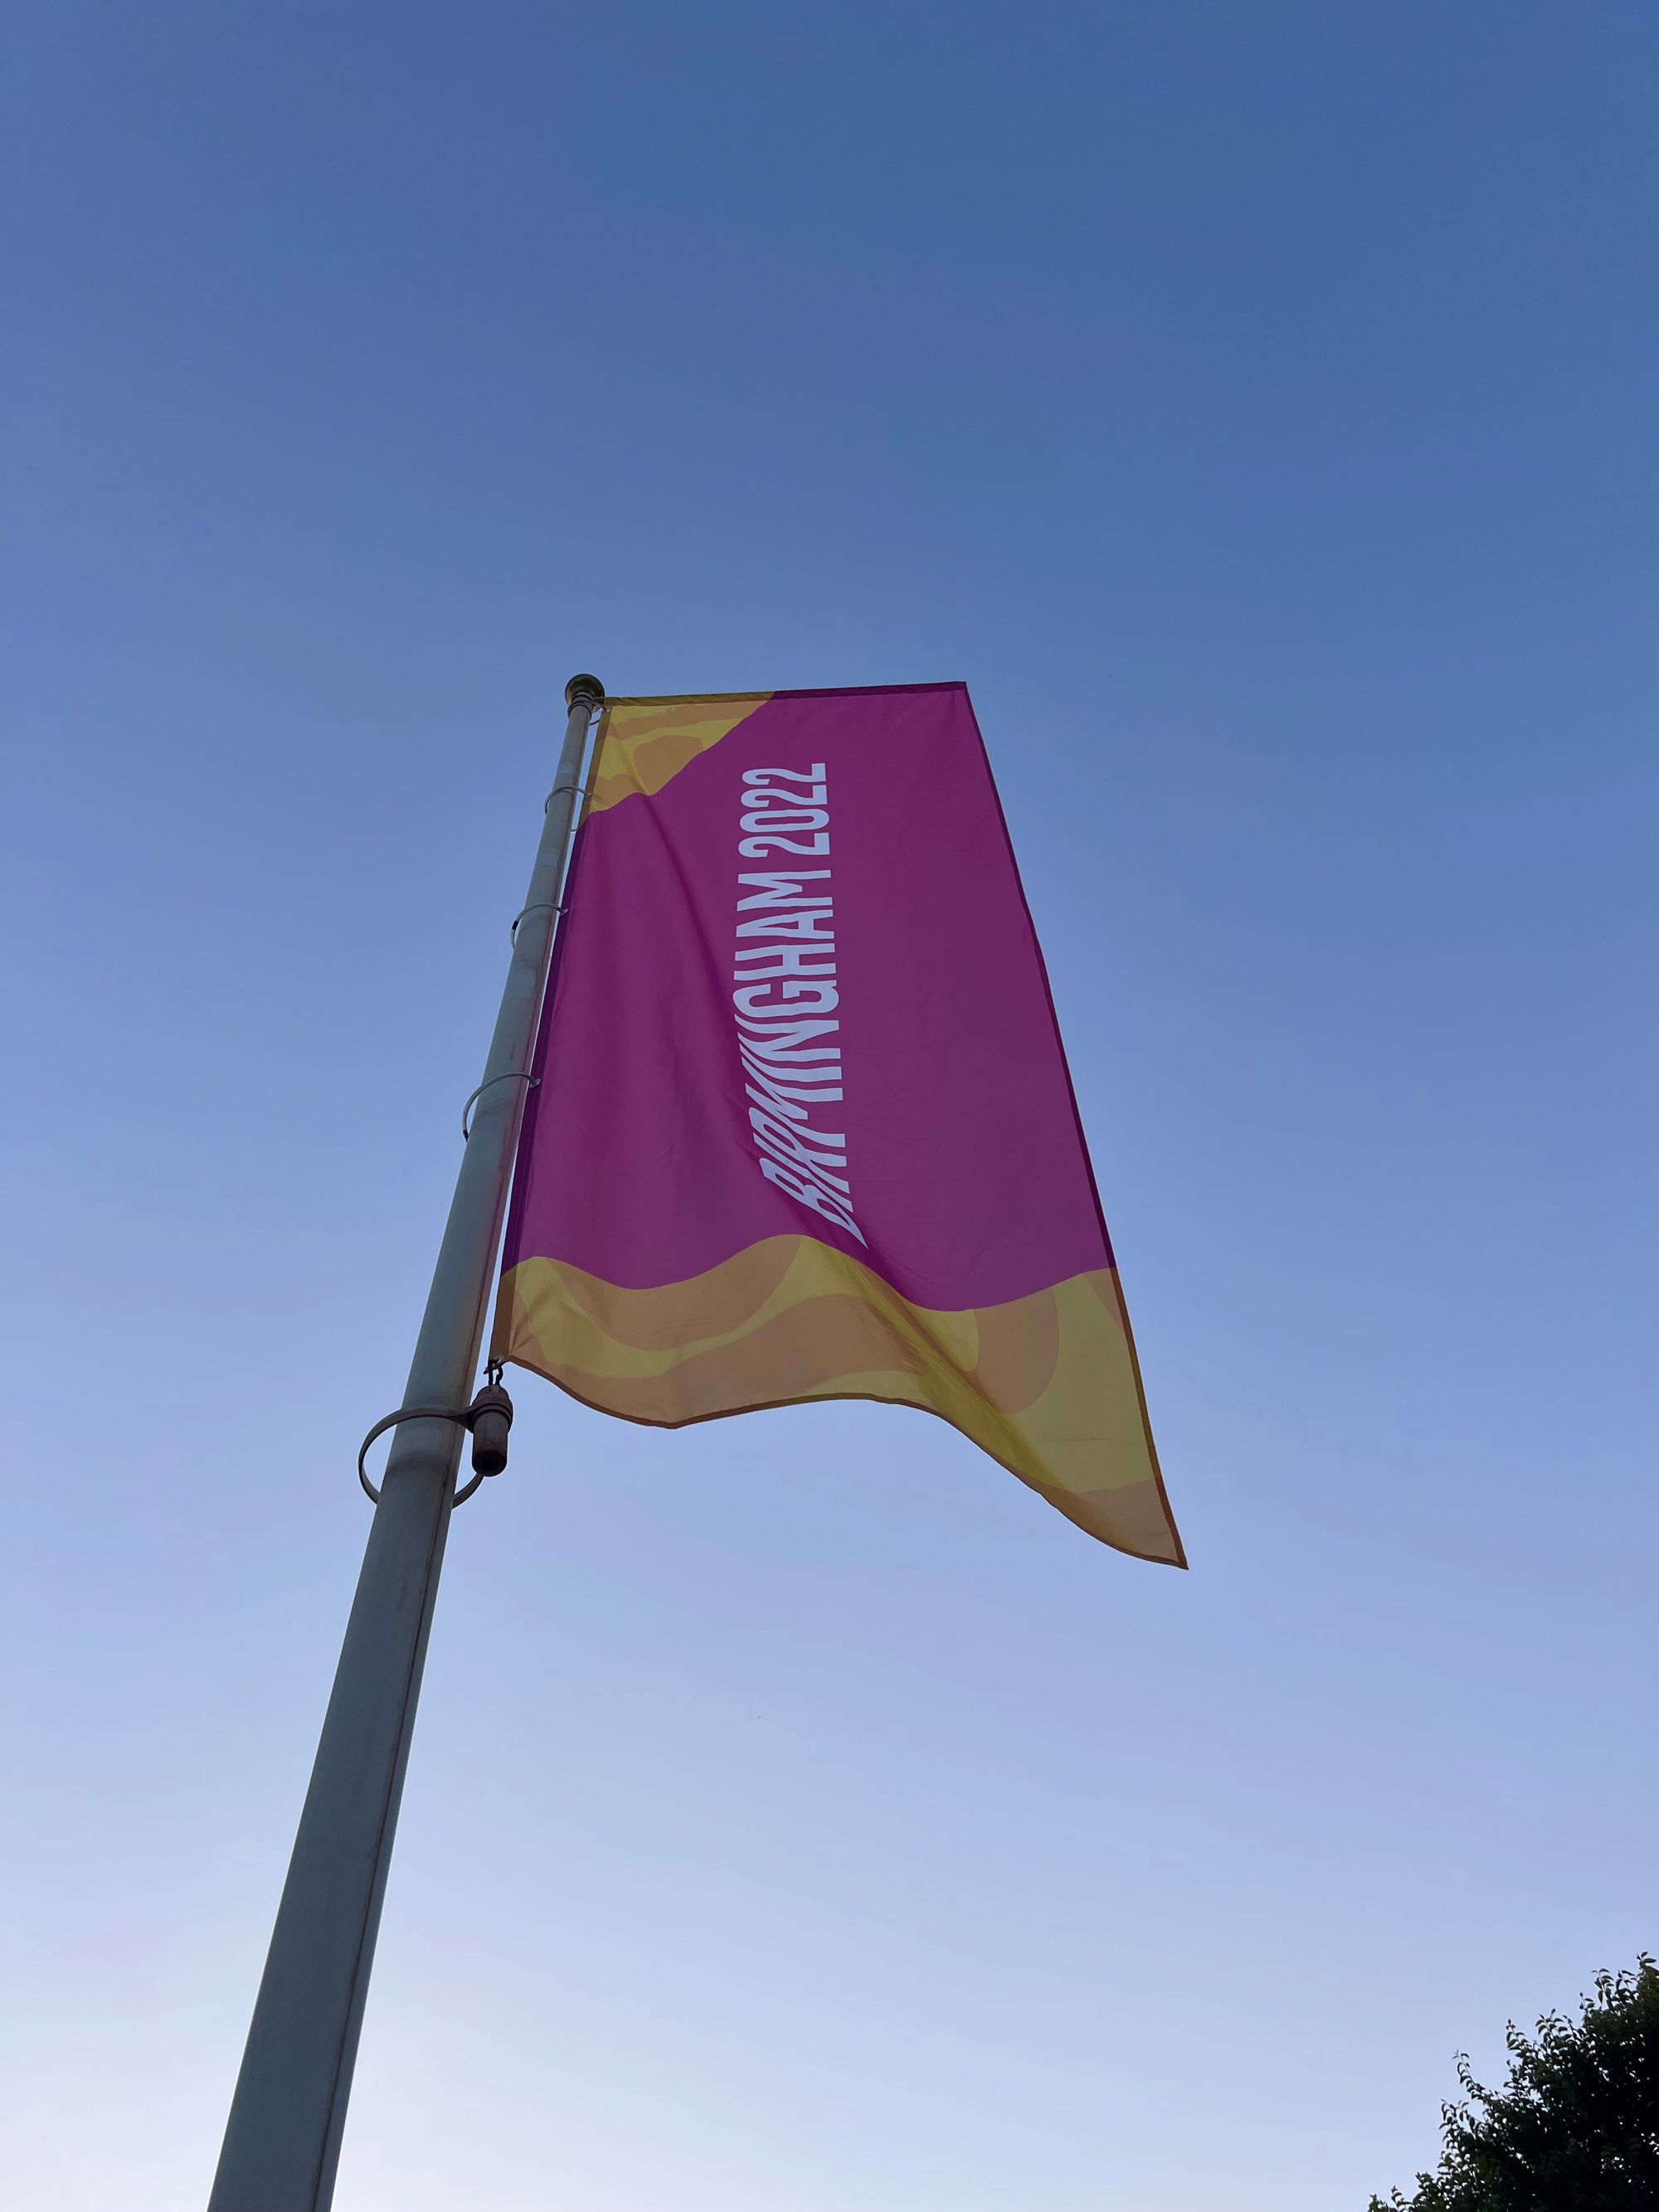 A large vertical banner against a blue sky reads "BIRMINGHAM 2022."